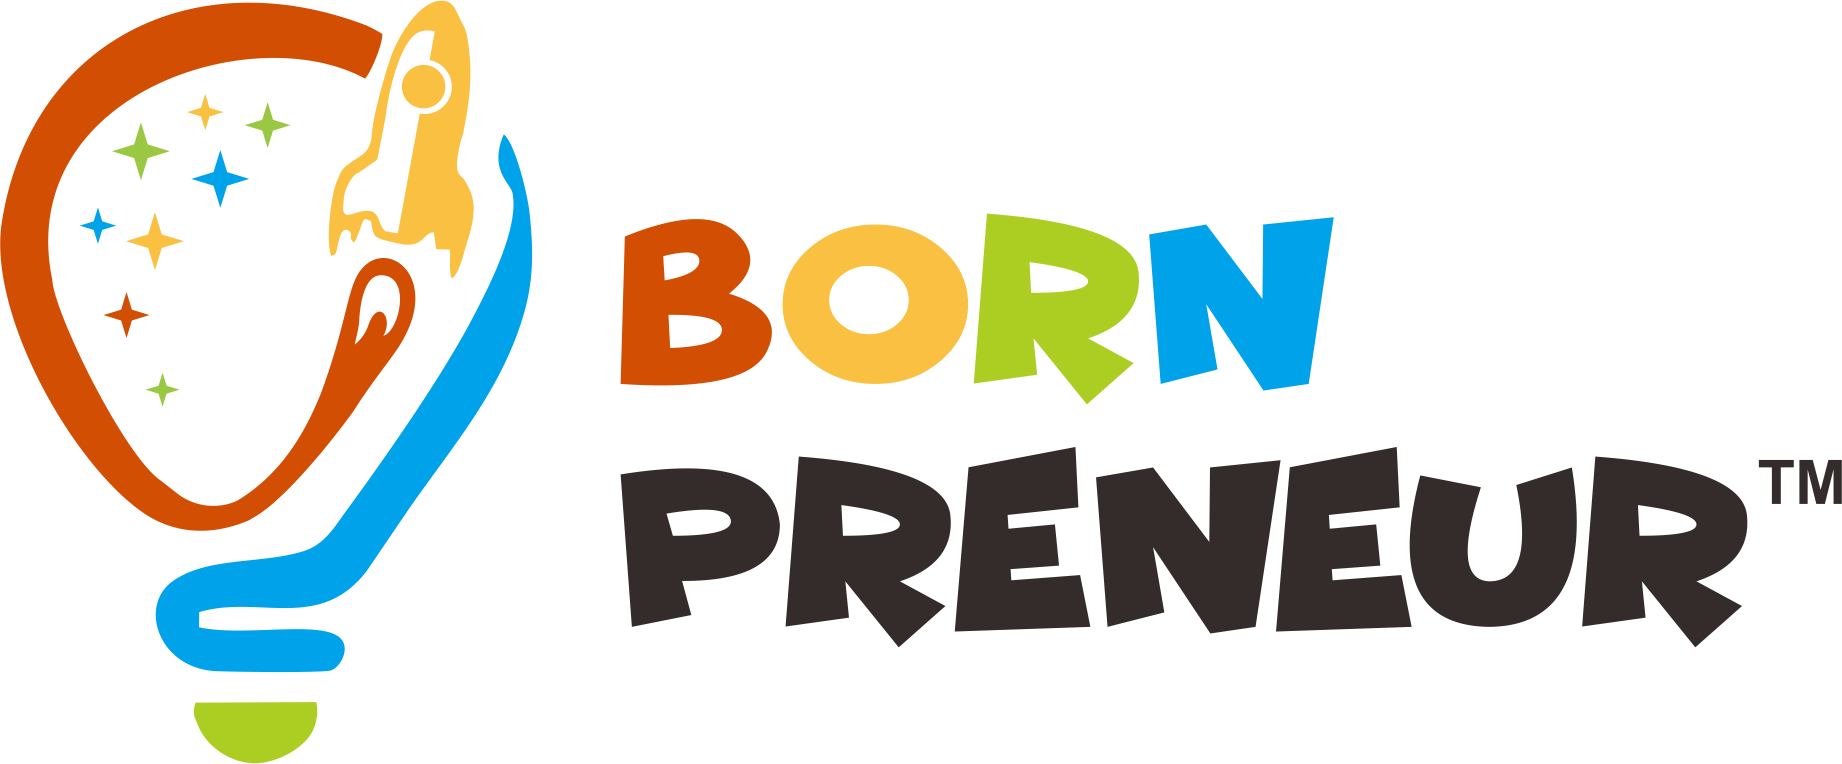 Entrepreneurship Logo - Bornpreneur – Born to be an Entrepreneur